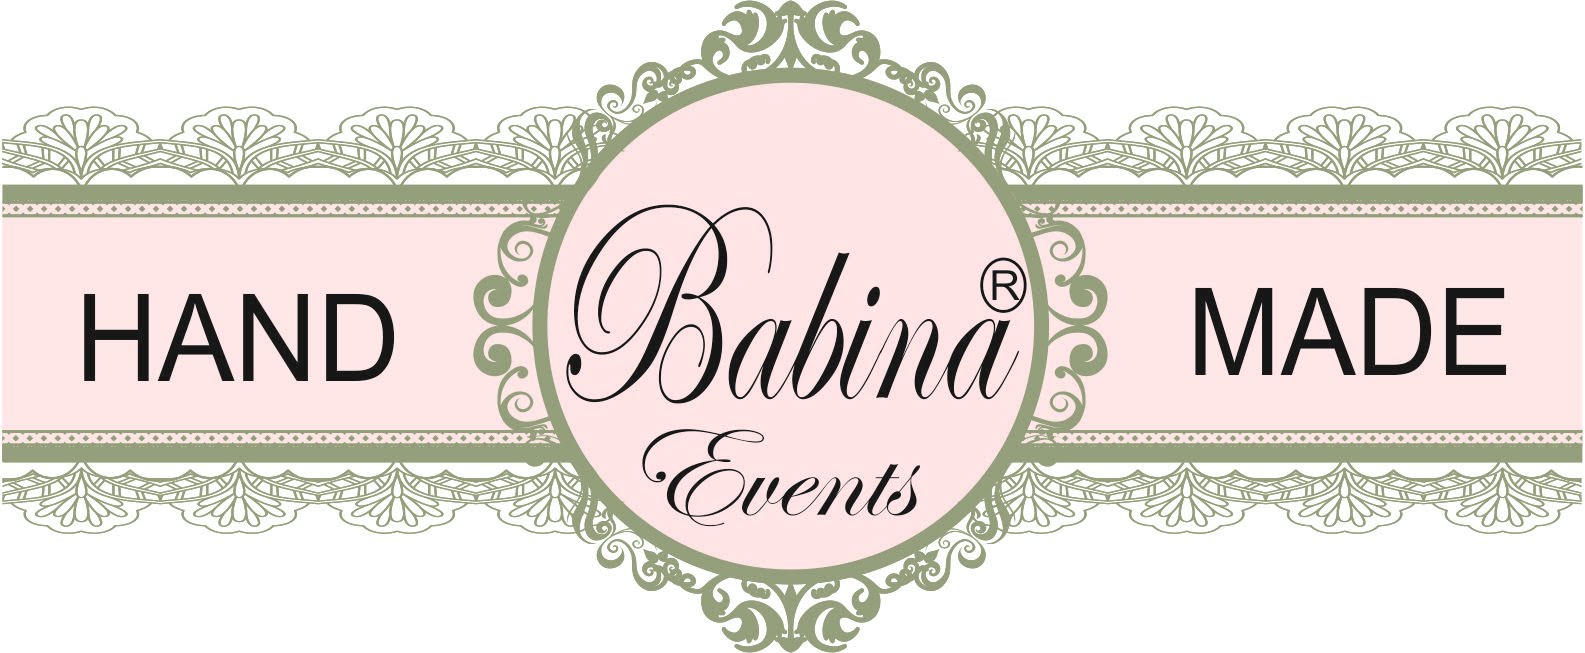 Babina Events